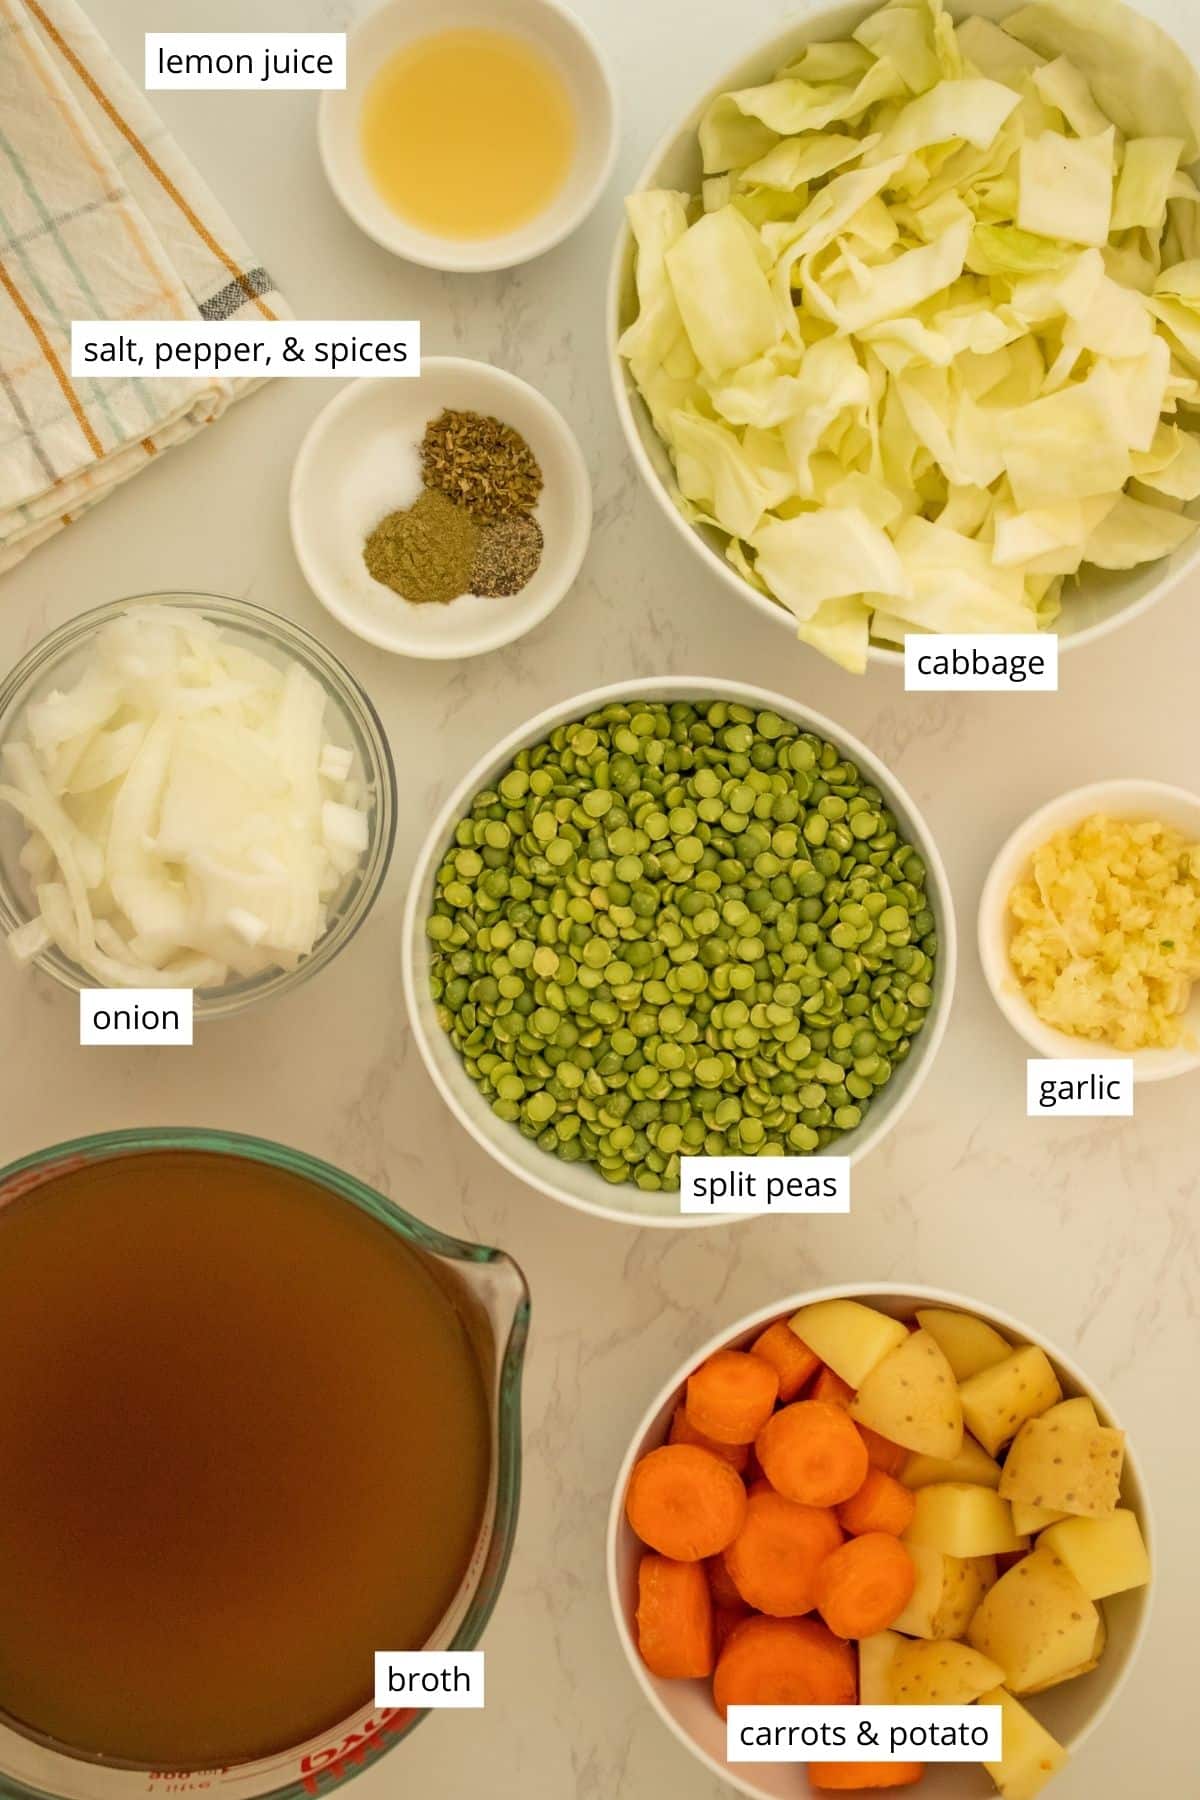 split peas, broth, veggies, and seasonings in bowls on a white table